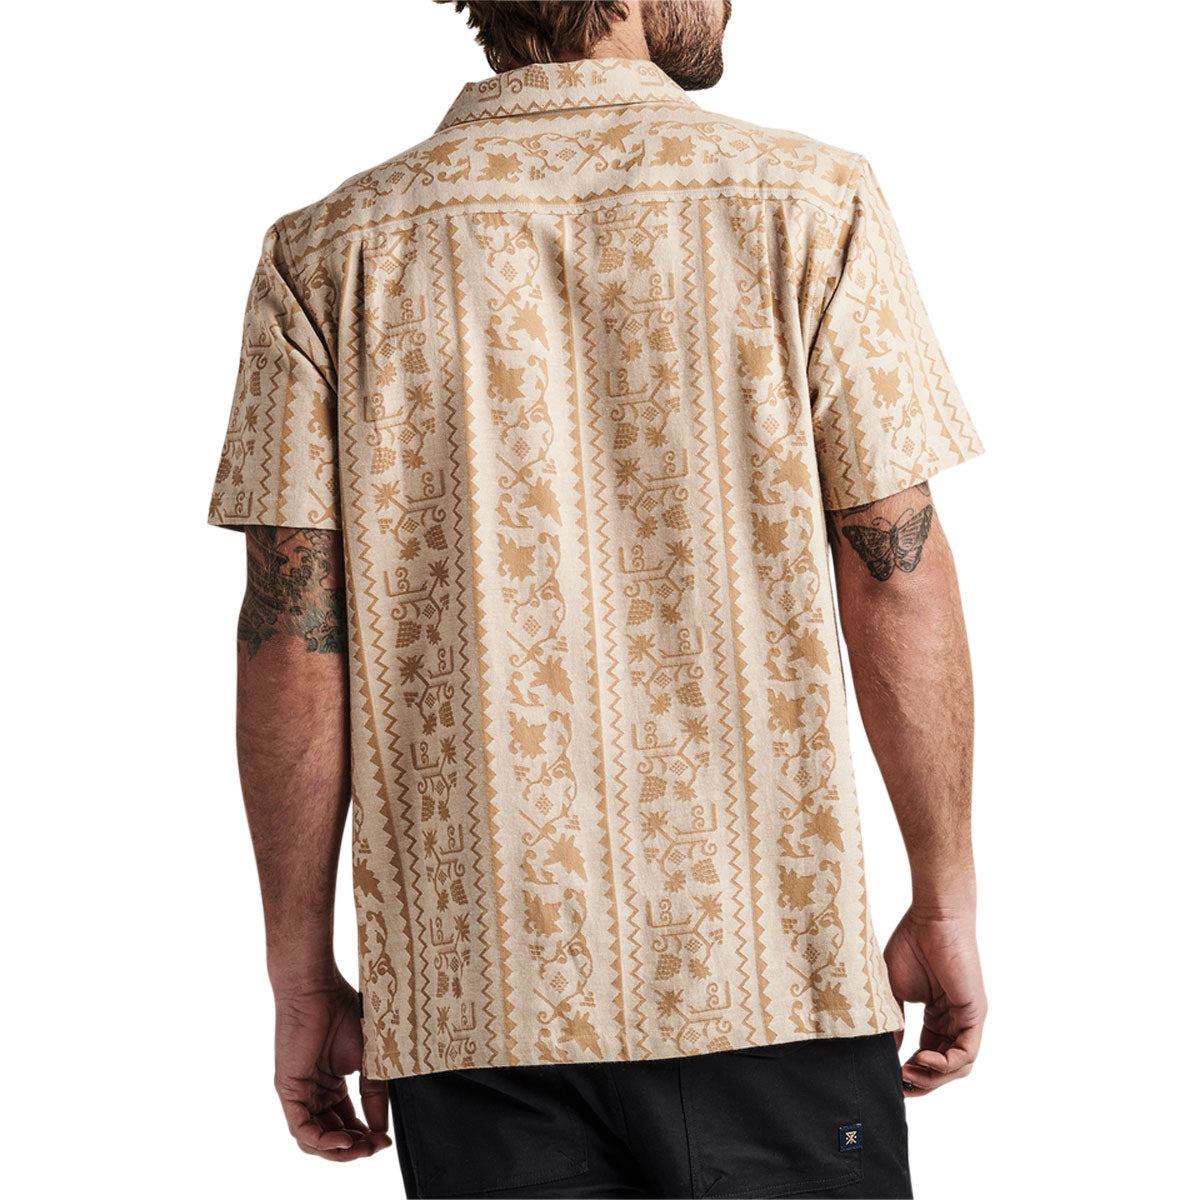 Roark Gonzo Woven Shirt - Sarda Almond image 2